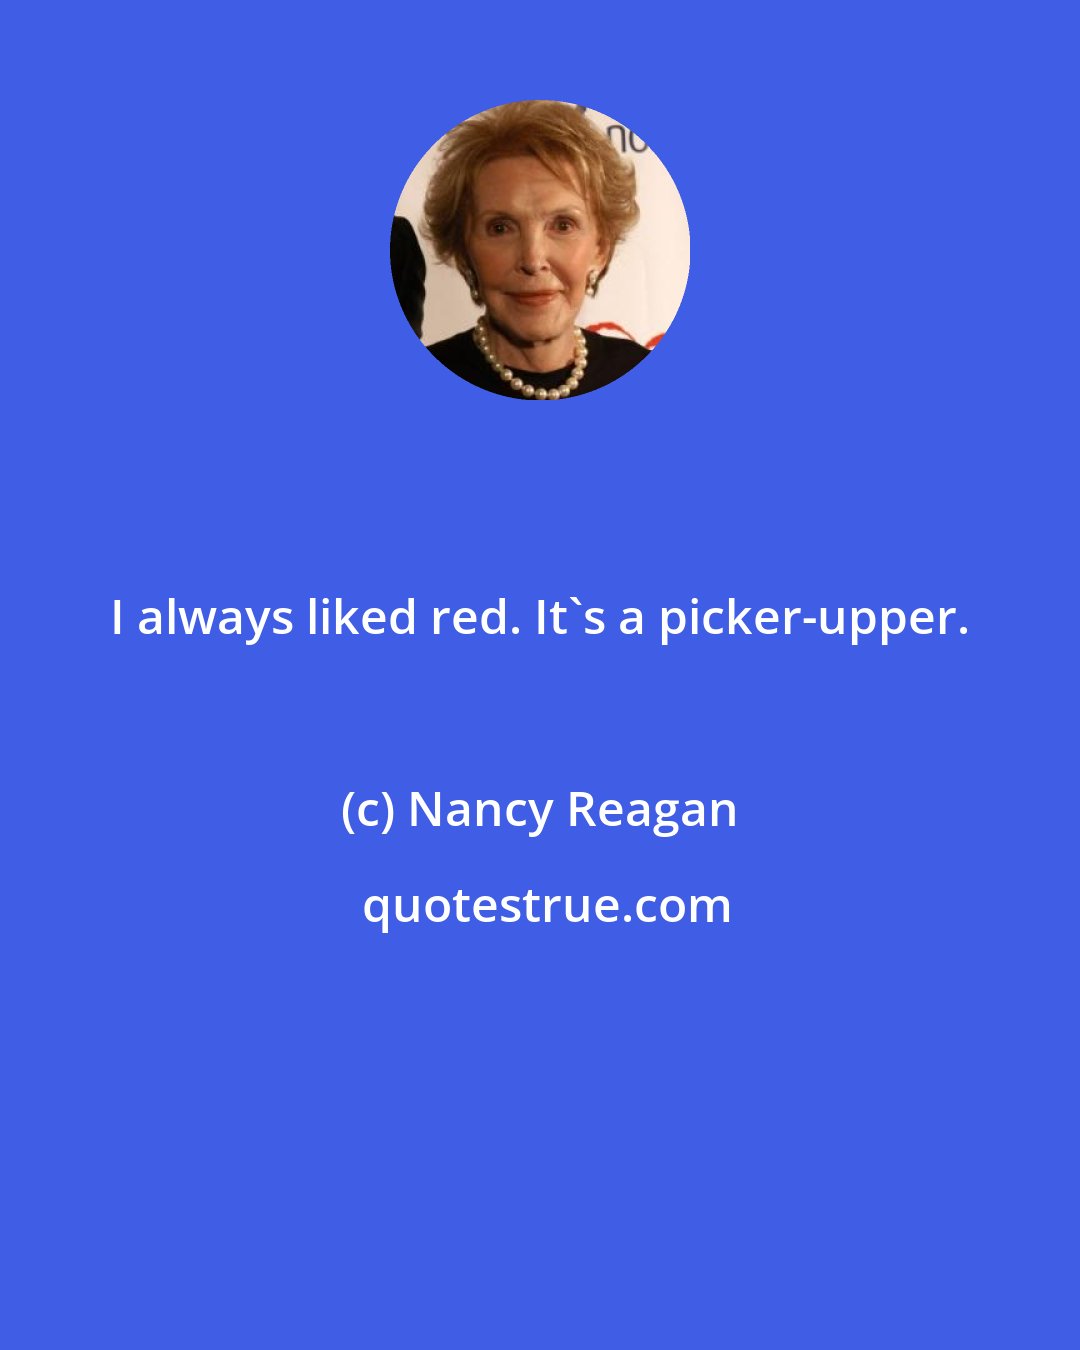 Nancy Reagan: I always liked red. It's a picker-upper.